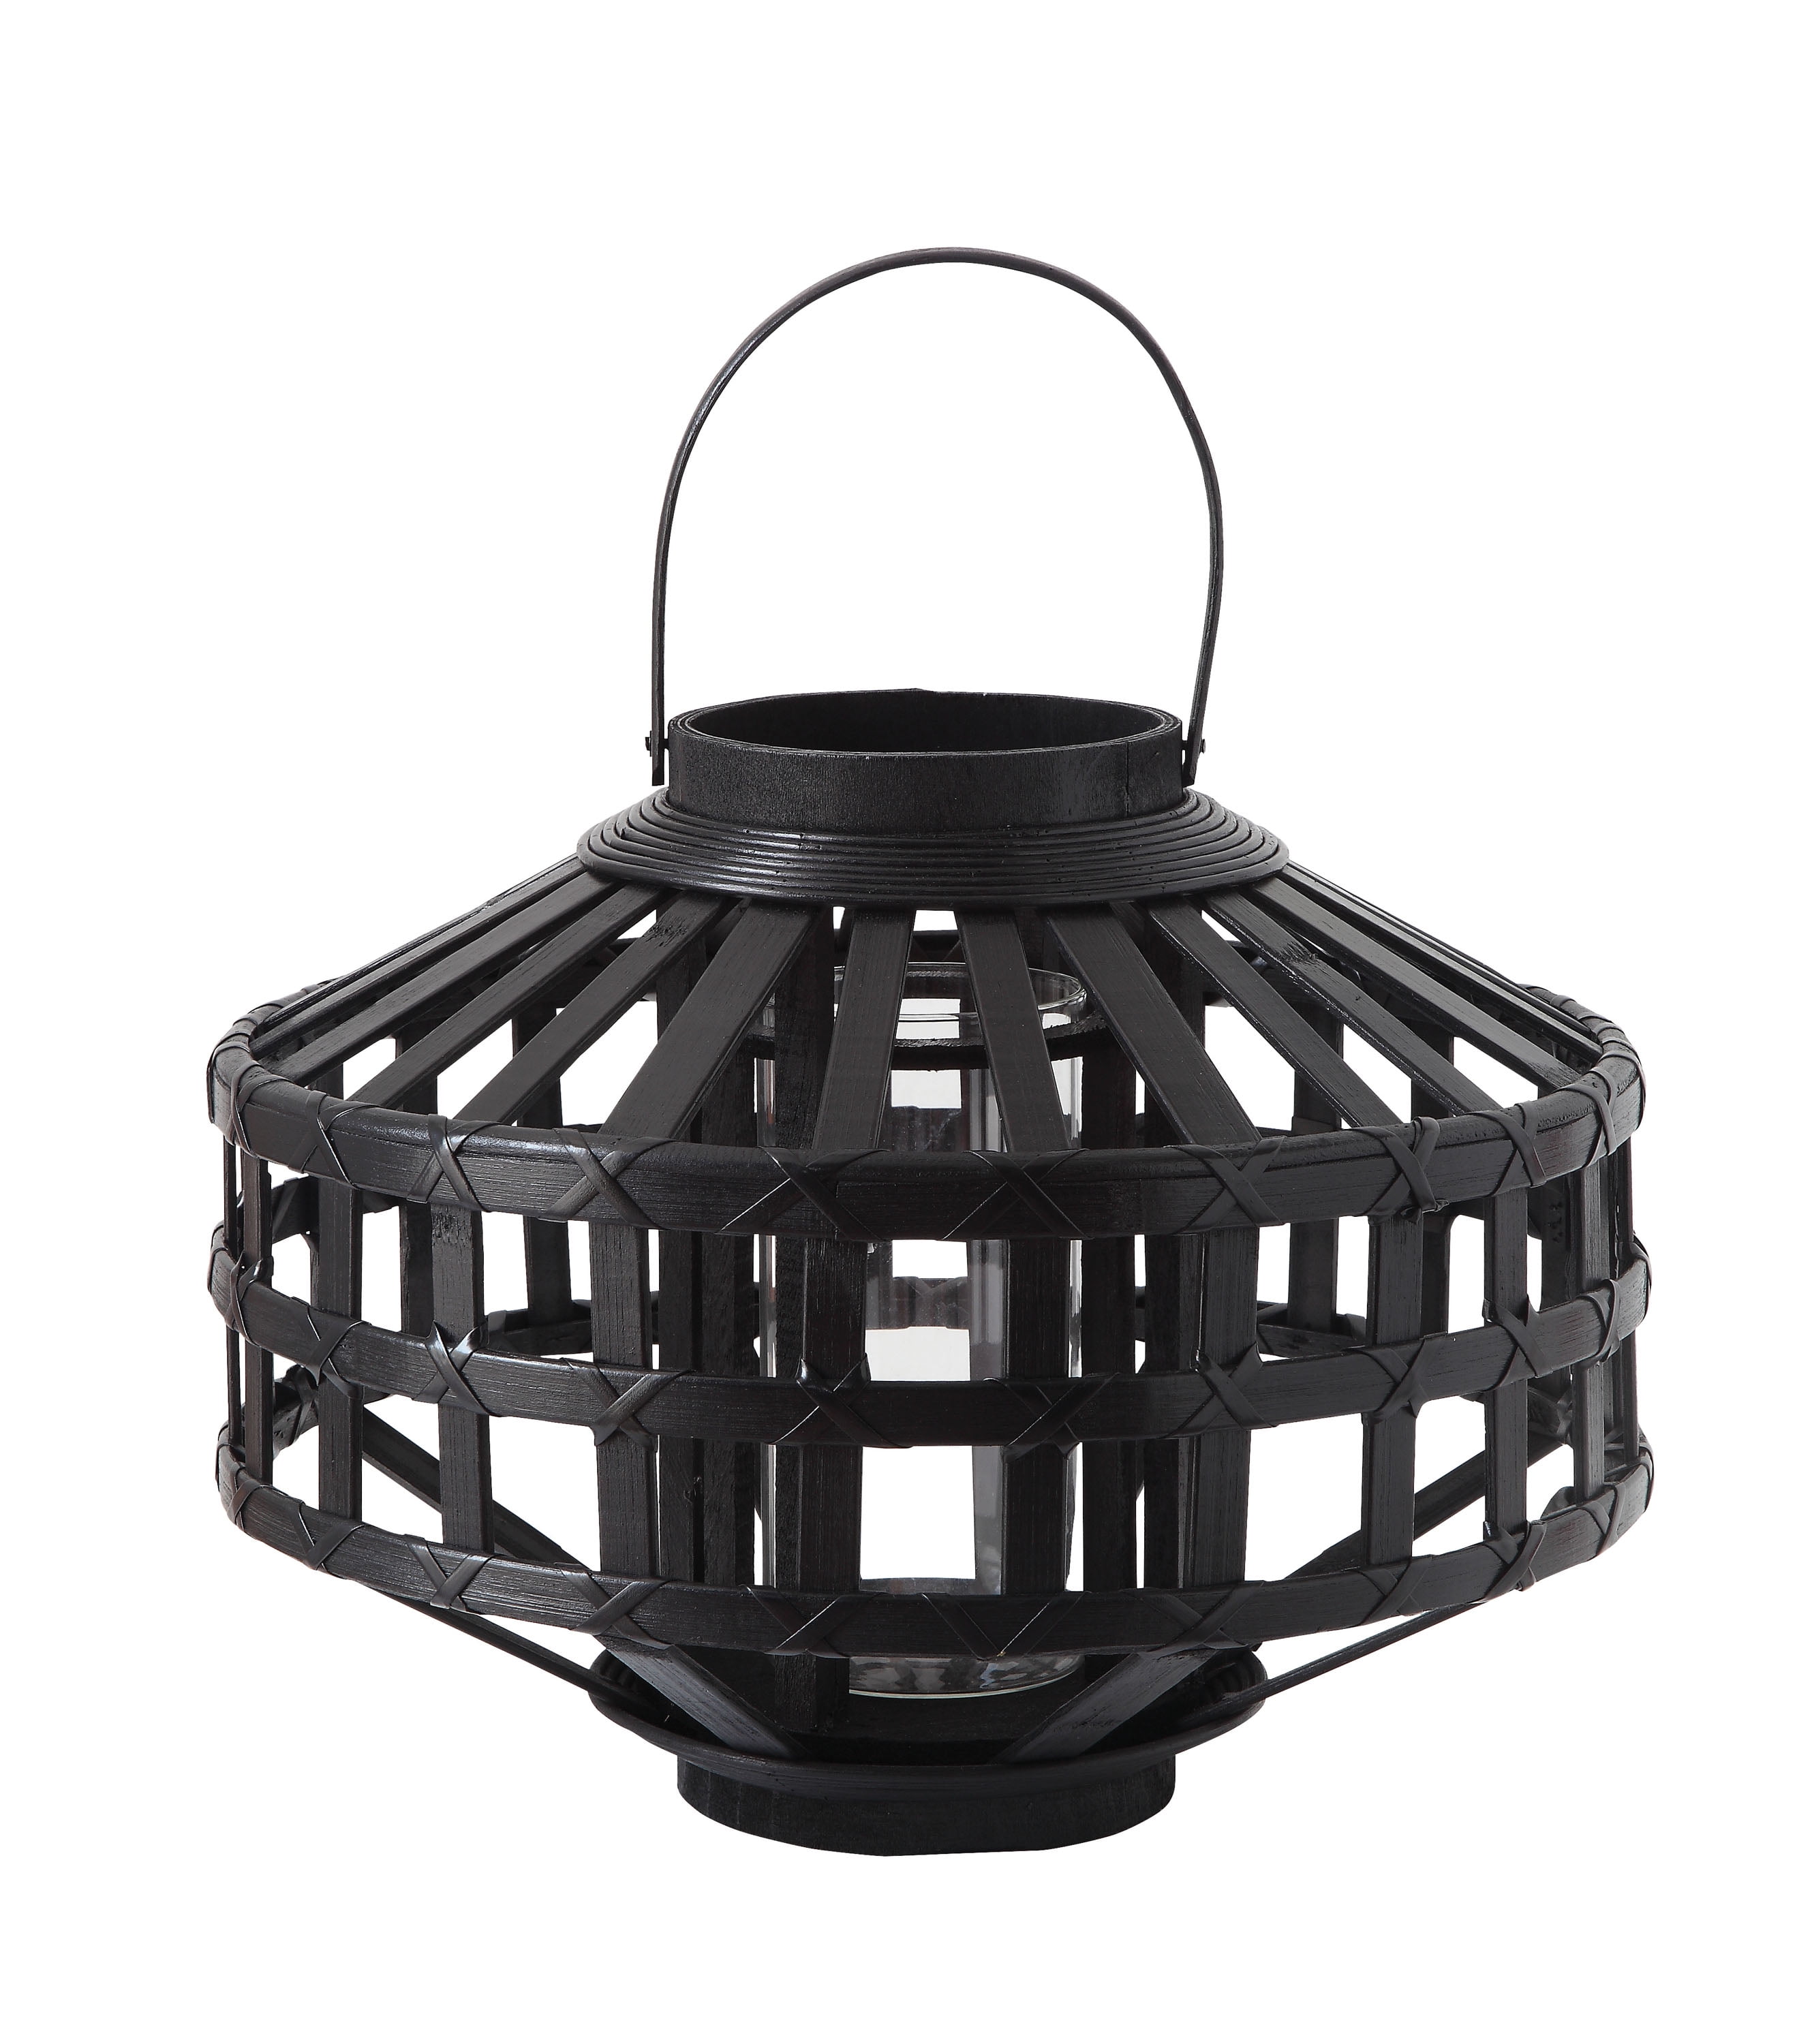 Bloomingville Lantern Oil Lamp Round Black Lantern Garden Decor 